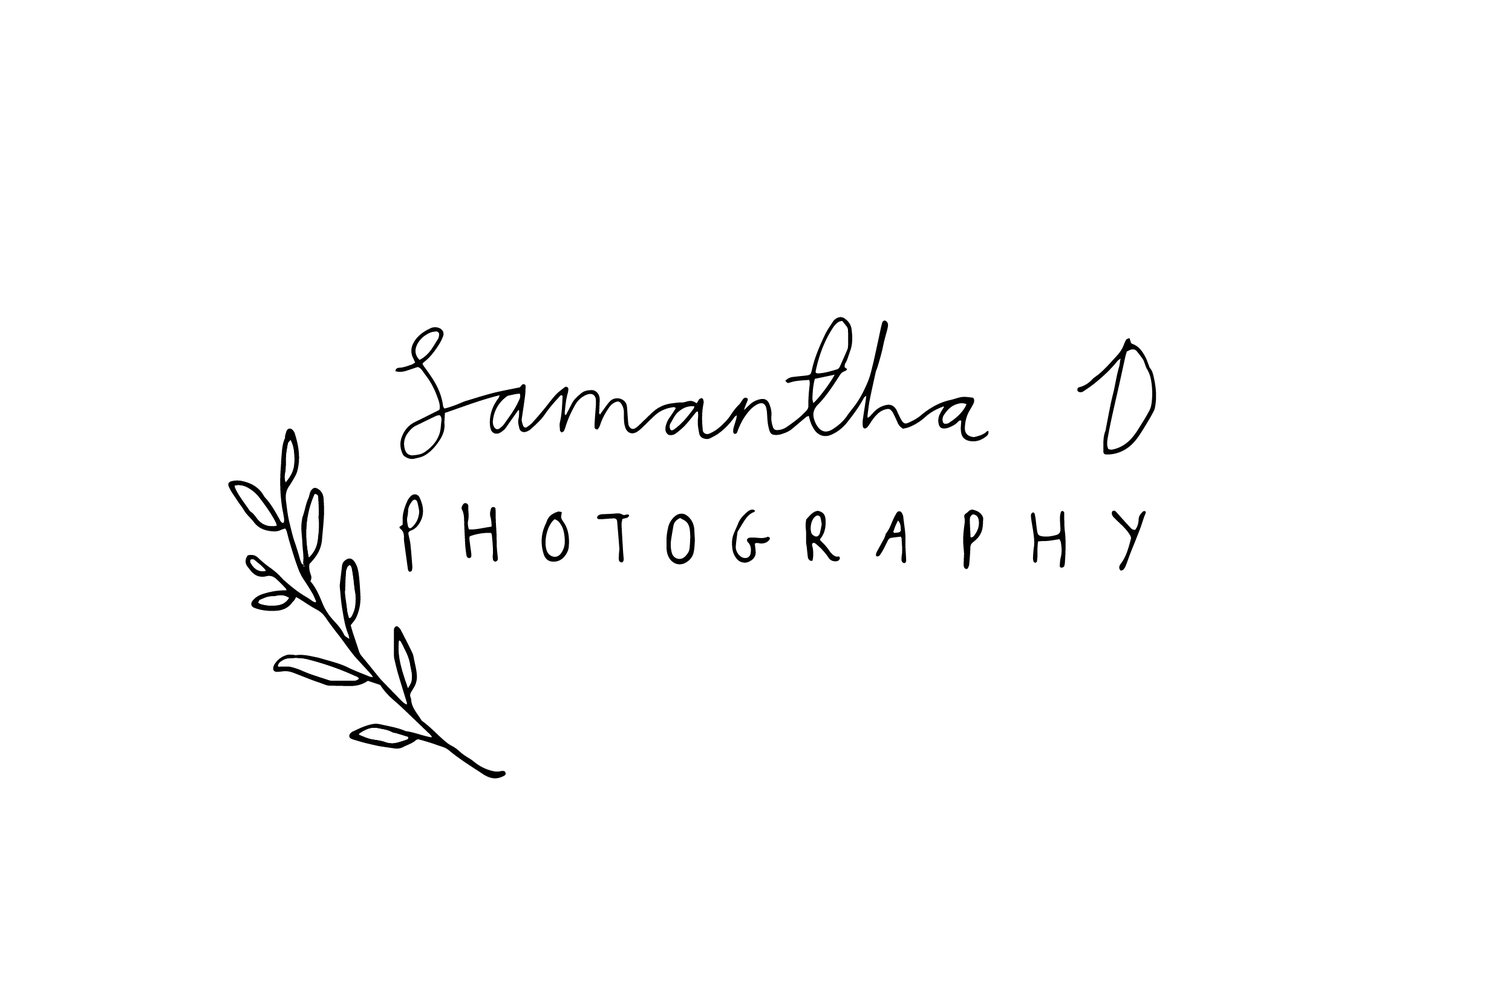 Samantha D. Photography Newborn & Family Photographer Nantwich, Chester, Cheshire